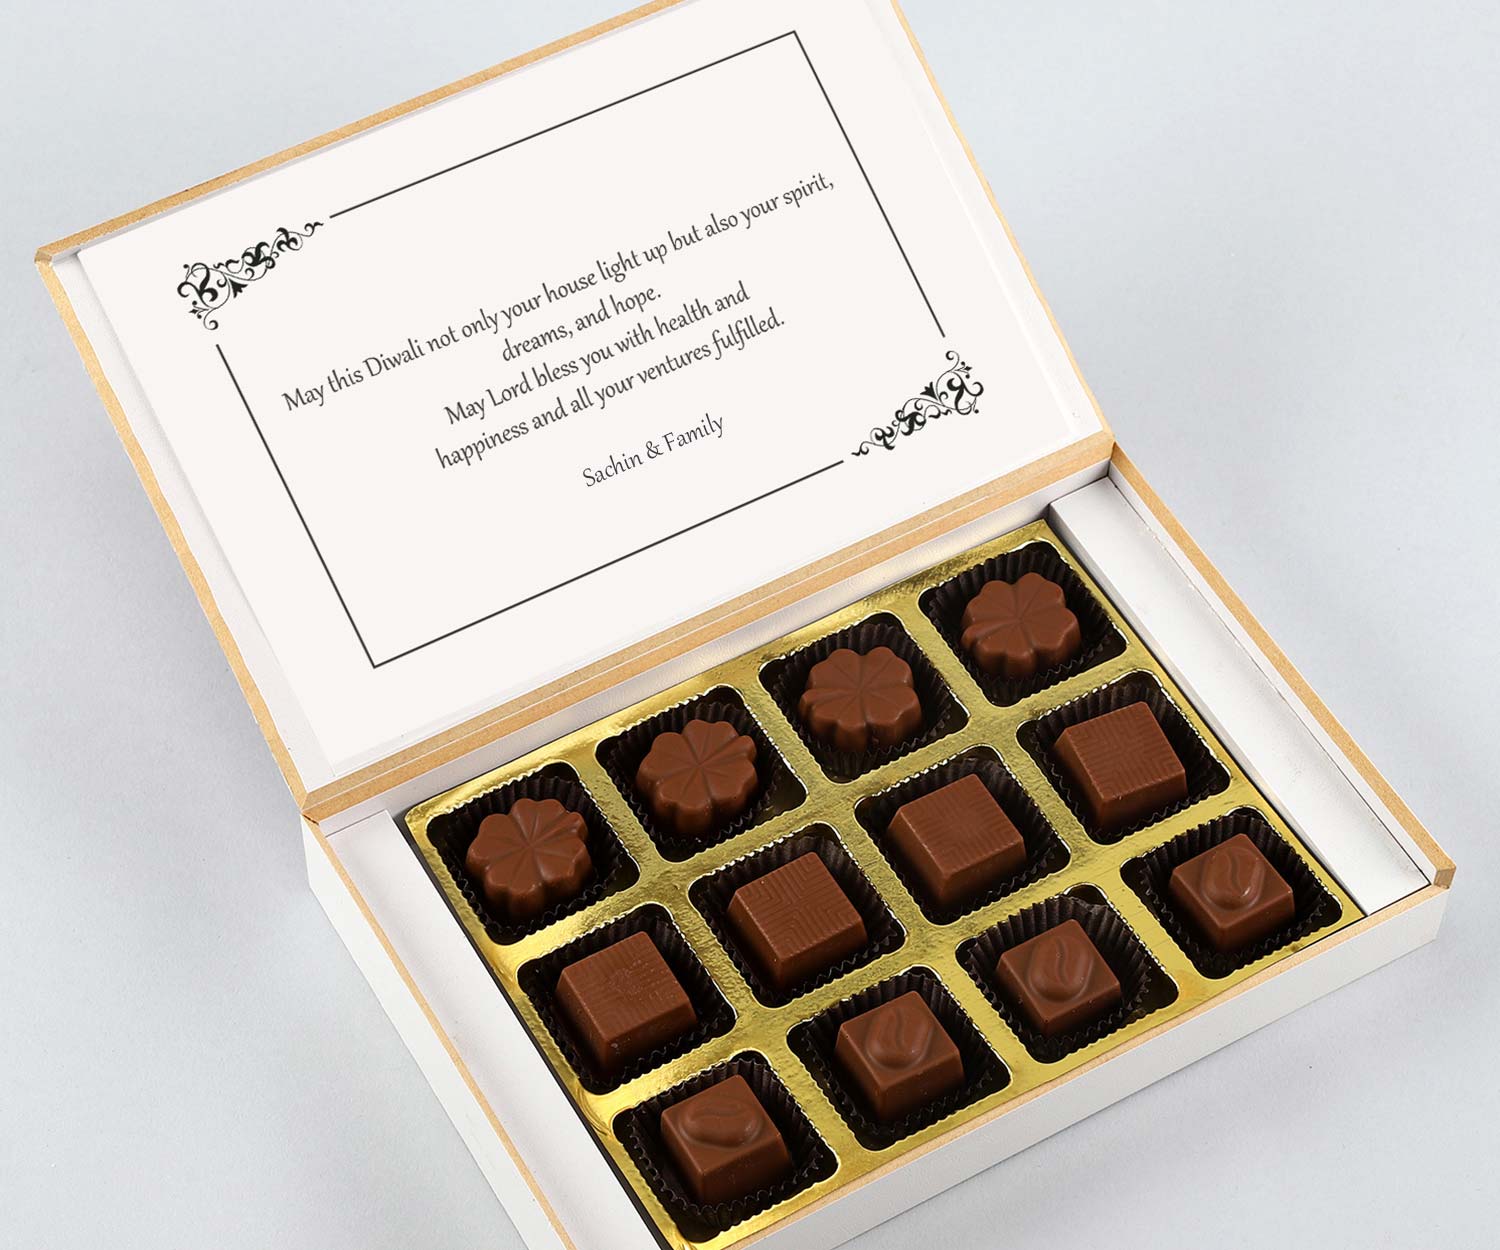 White modern box of wrapped chocolates diwali gift